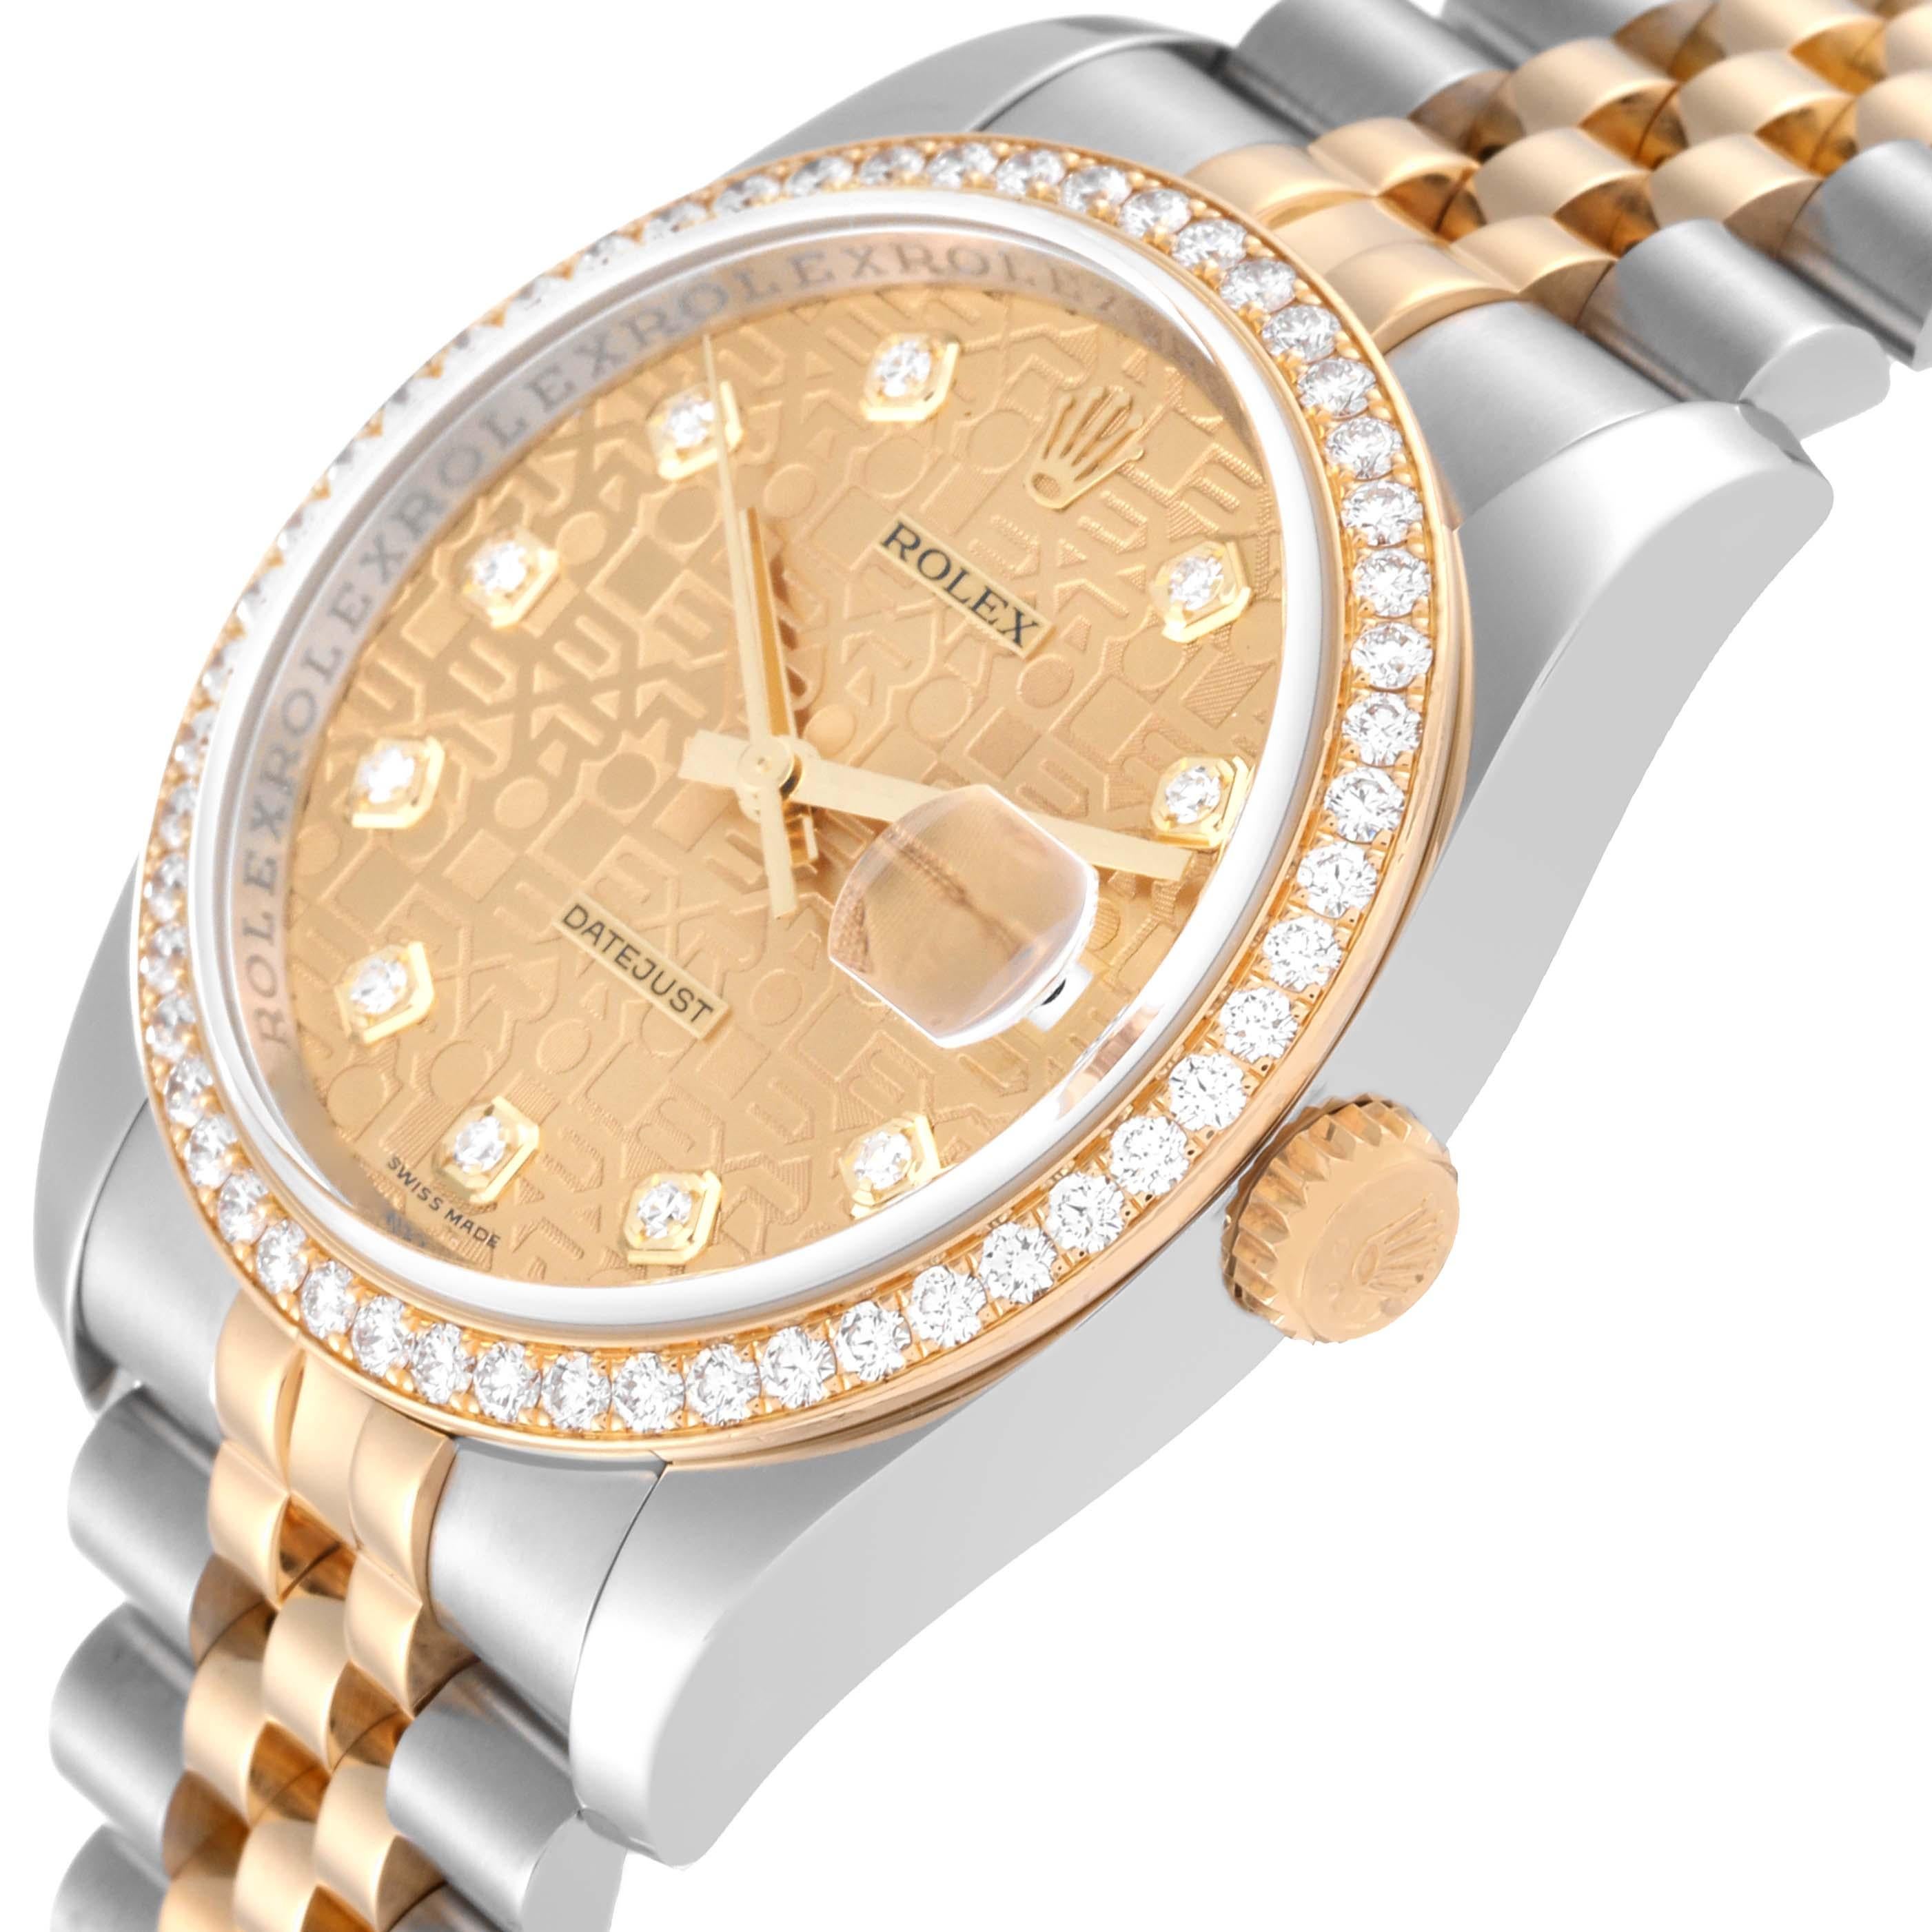 Rolex Datejust Anniversary Dial Steel Yellow Gold Diamond Men's Watch 116243 For Sale 2